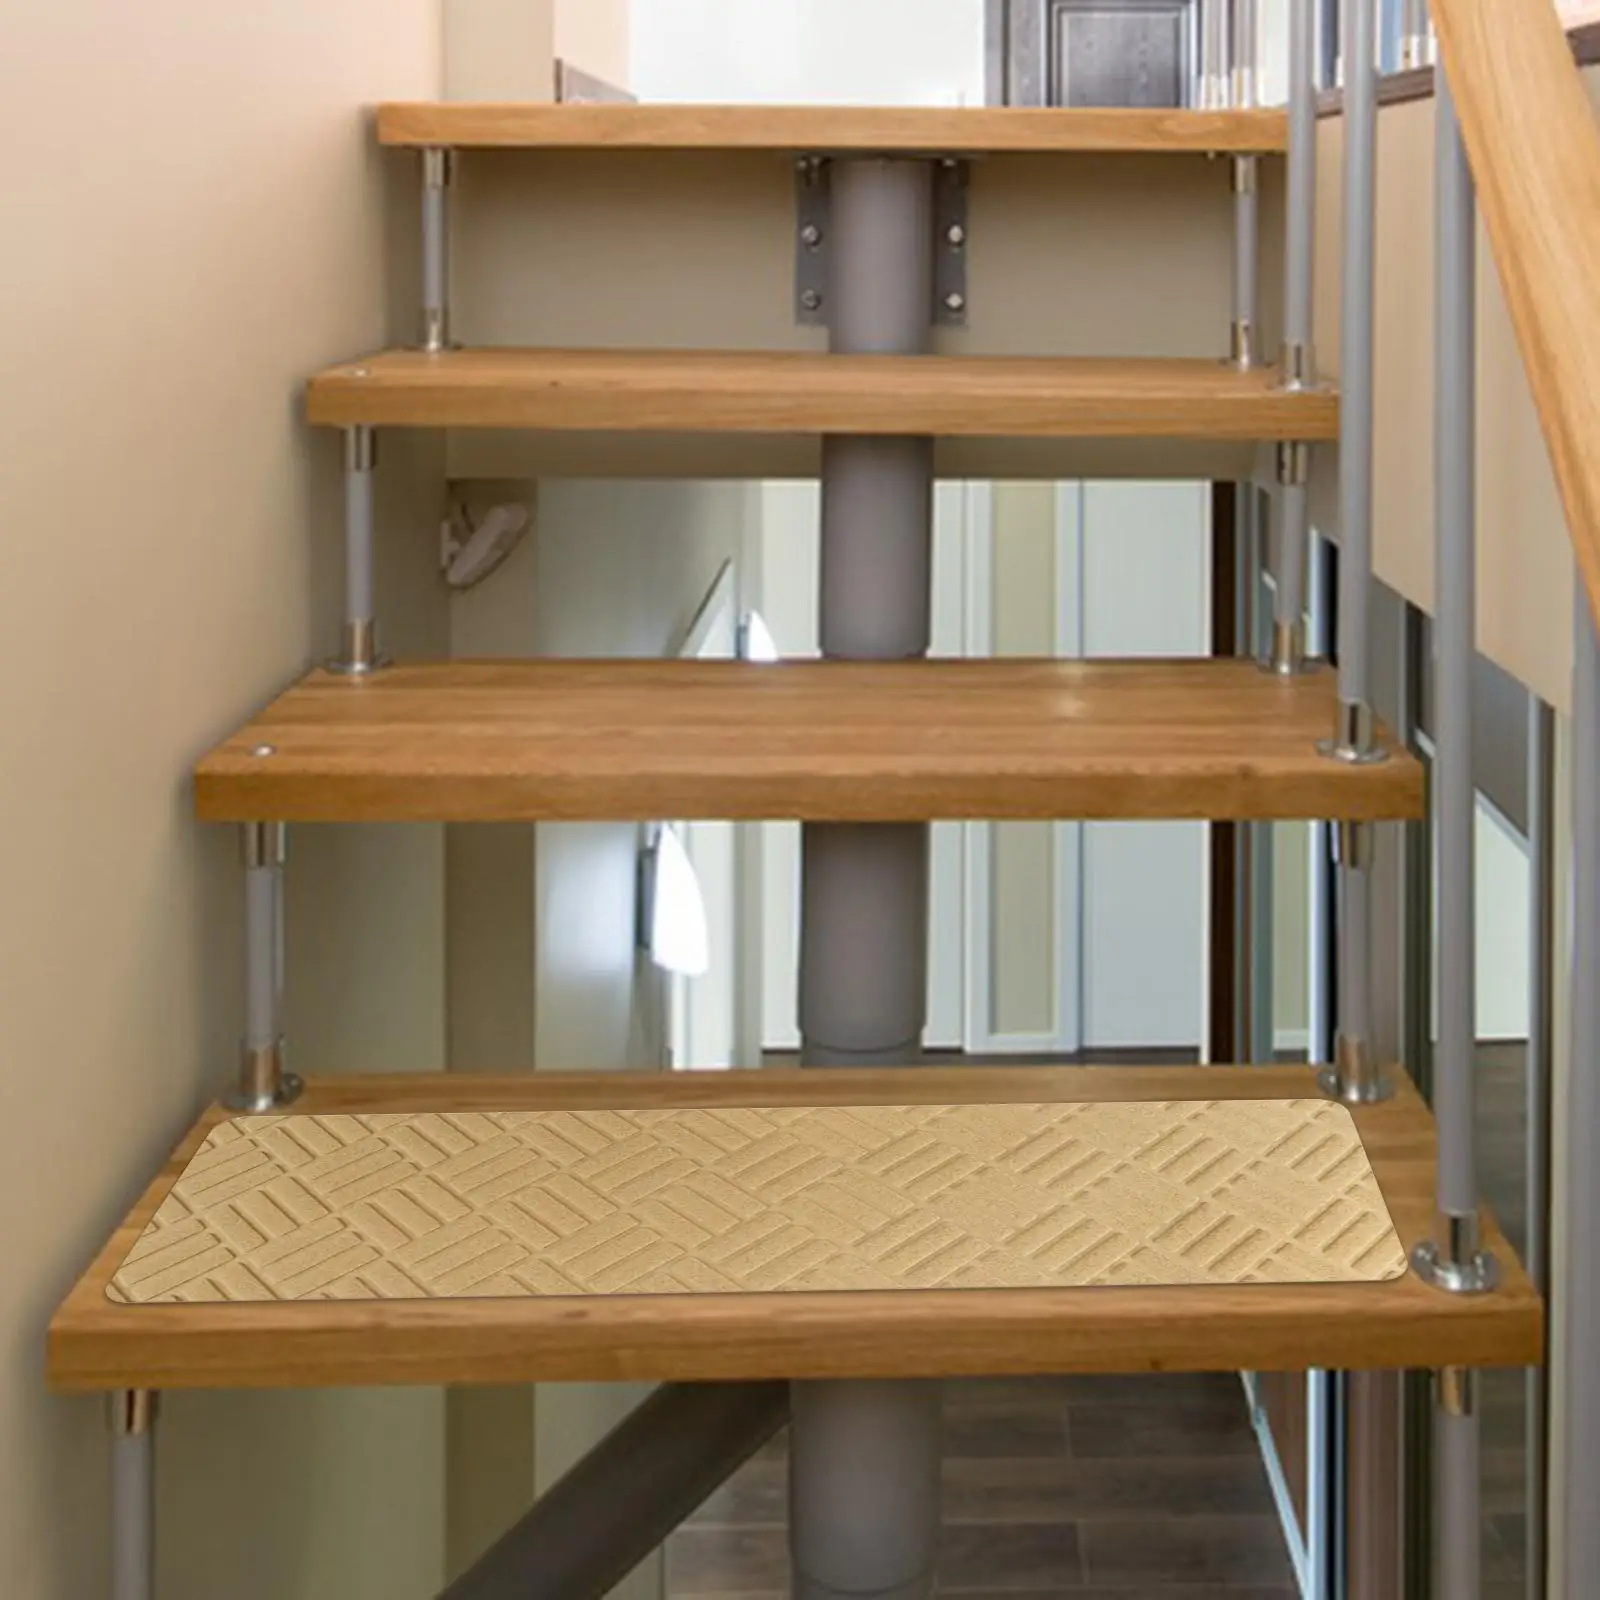 Stair Runner Soft Edging Stair Rugs Non Skid Safety Rug Stair Treads for Corridor Living Room Wooden Steps Restaurant Game Room